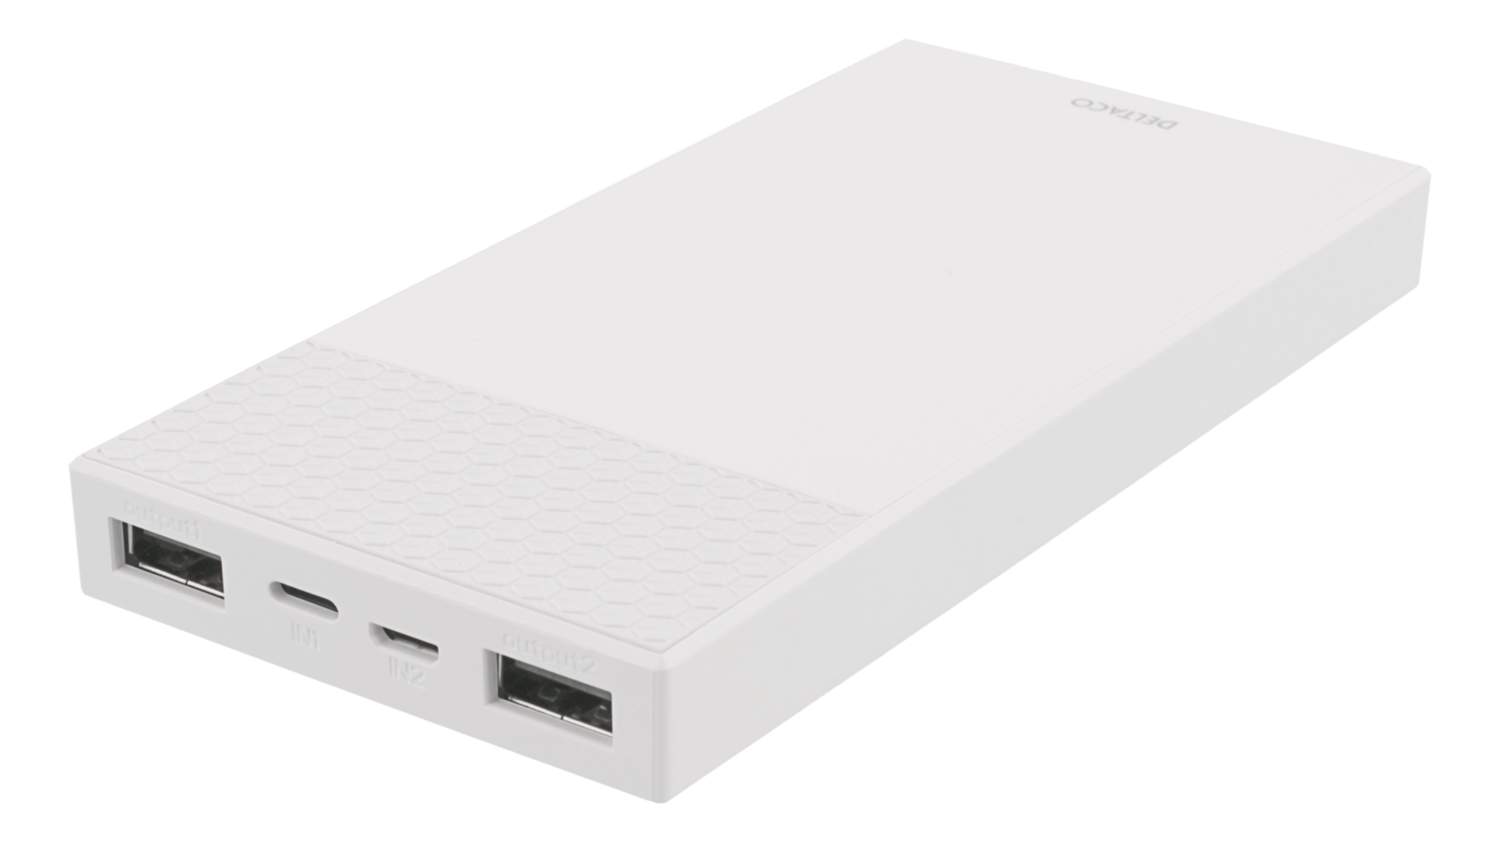 DELTACO 10 000 mAh Powerbank, 2x USB-A, 2.1A, LED-indikator